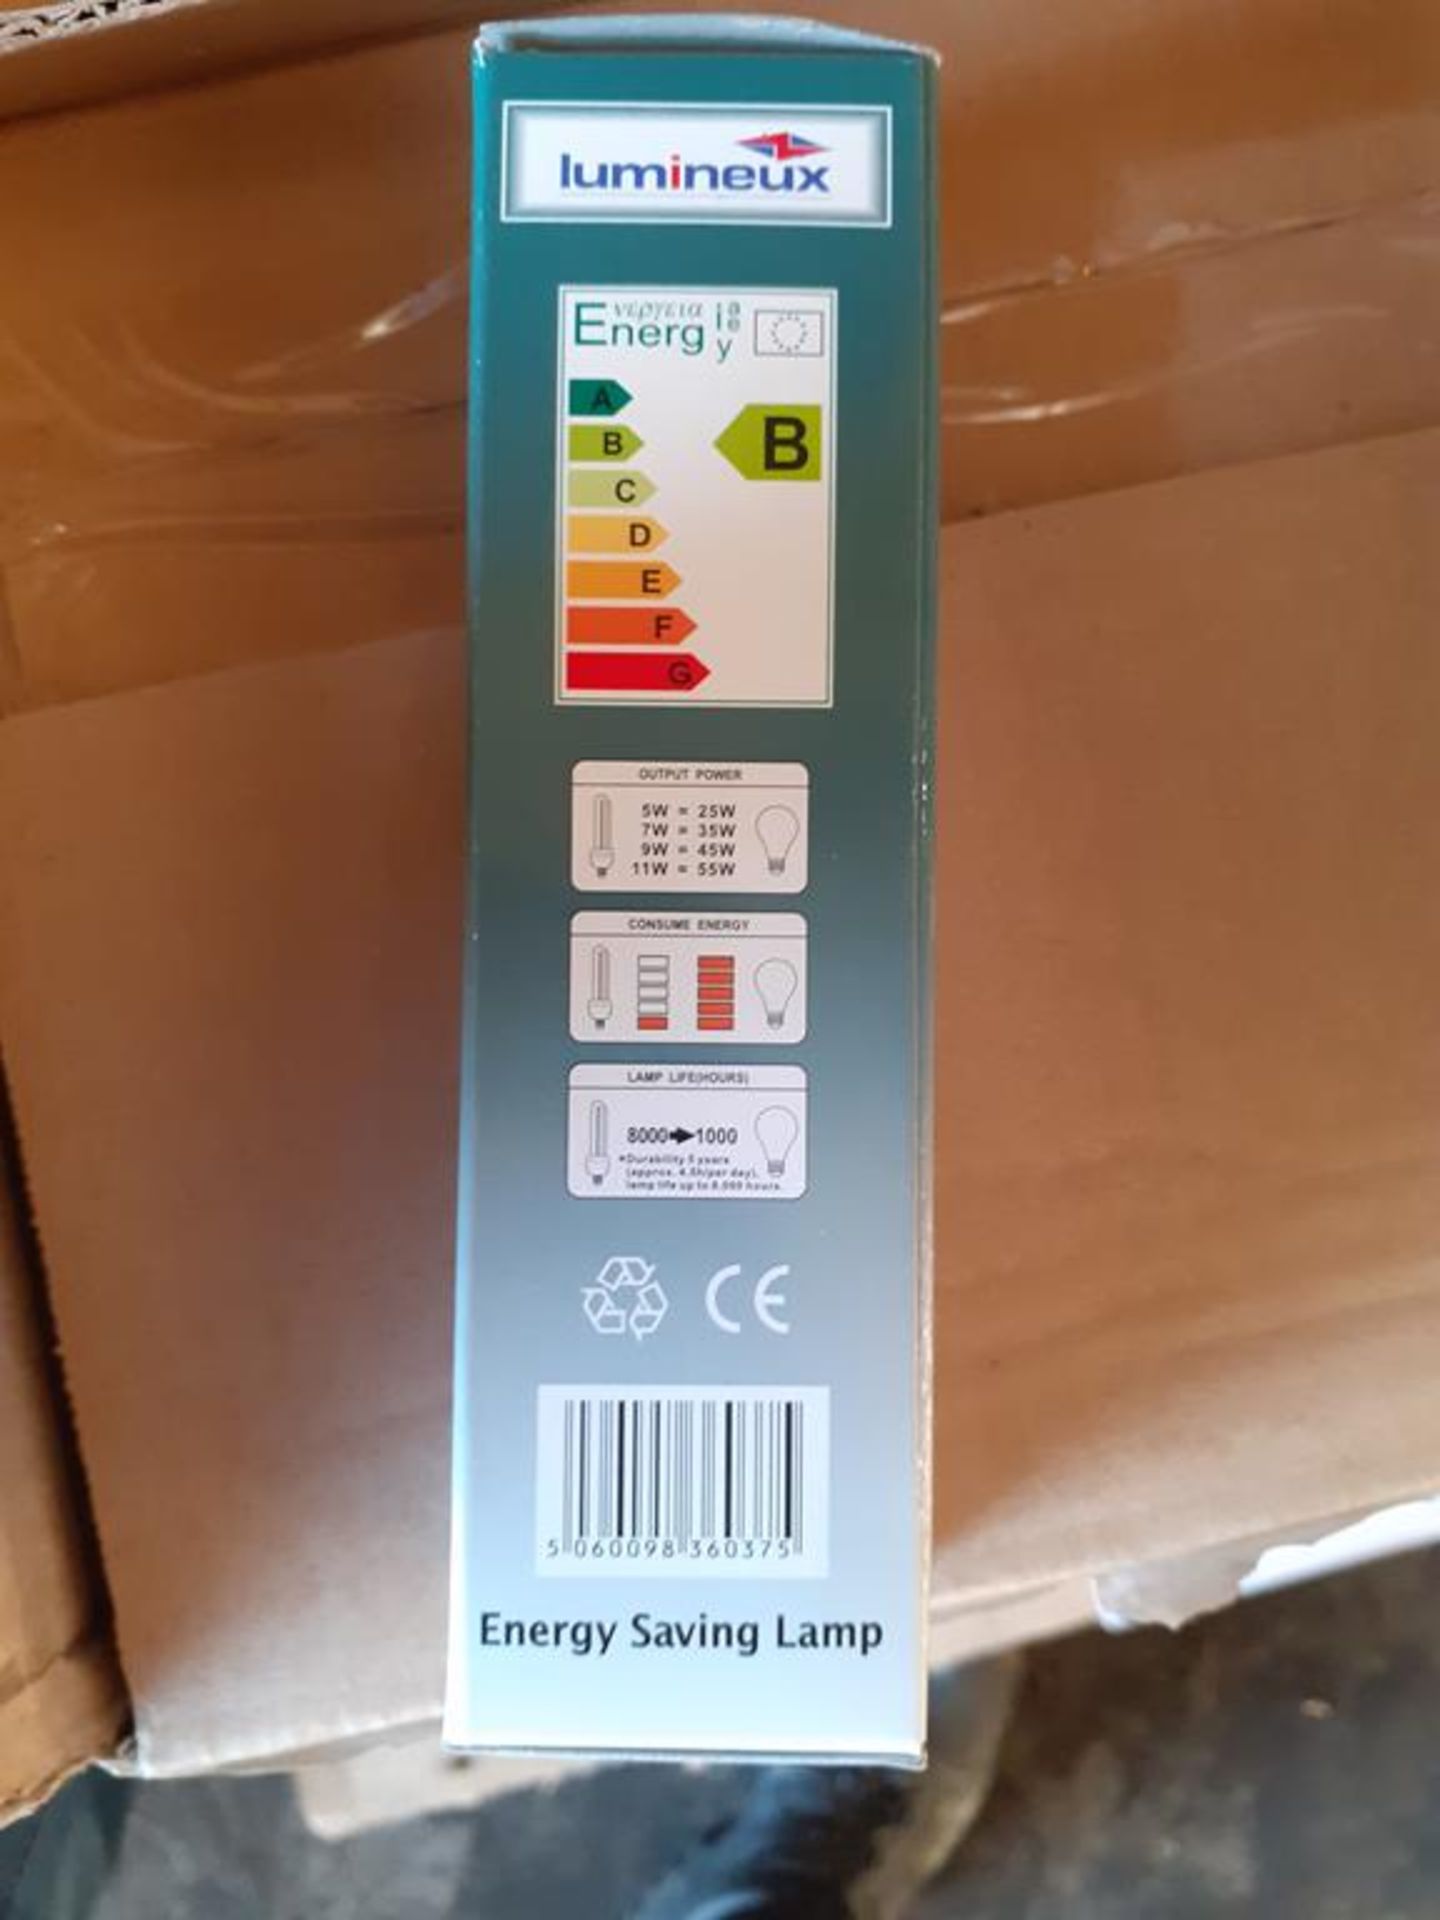 6x boxes of Lumineux Candle 9W B22 3500K 220-240V Energy Saving Light Bulbs (50pcs per box) - Image 4 of 4